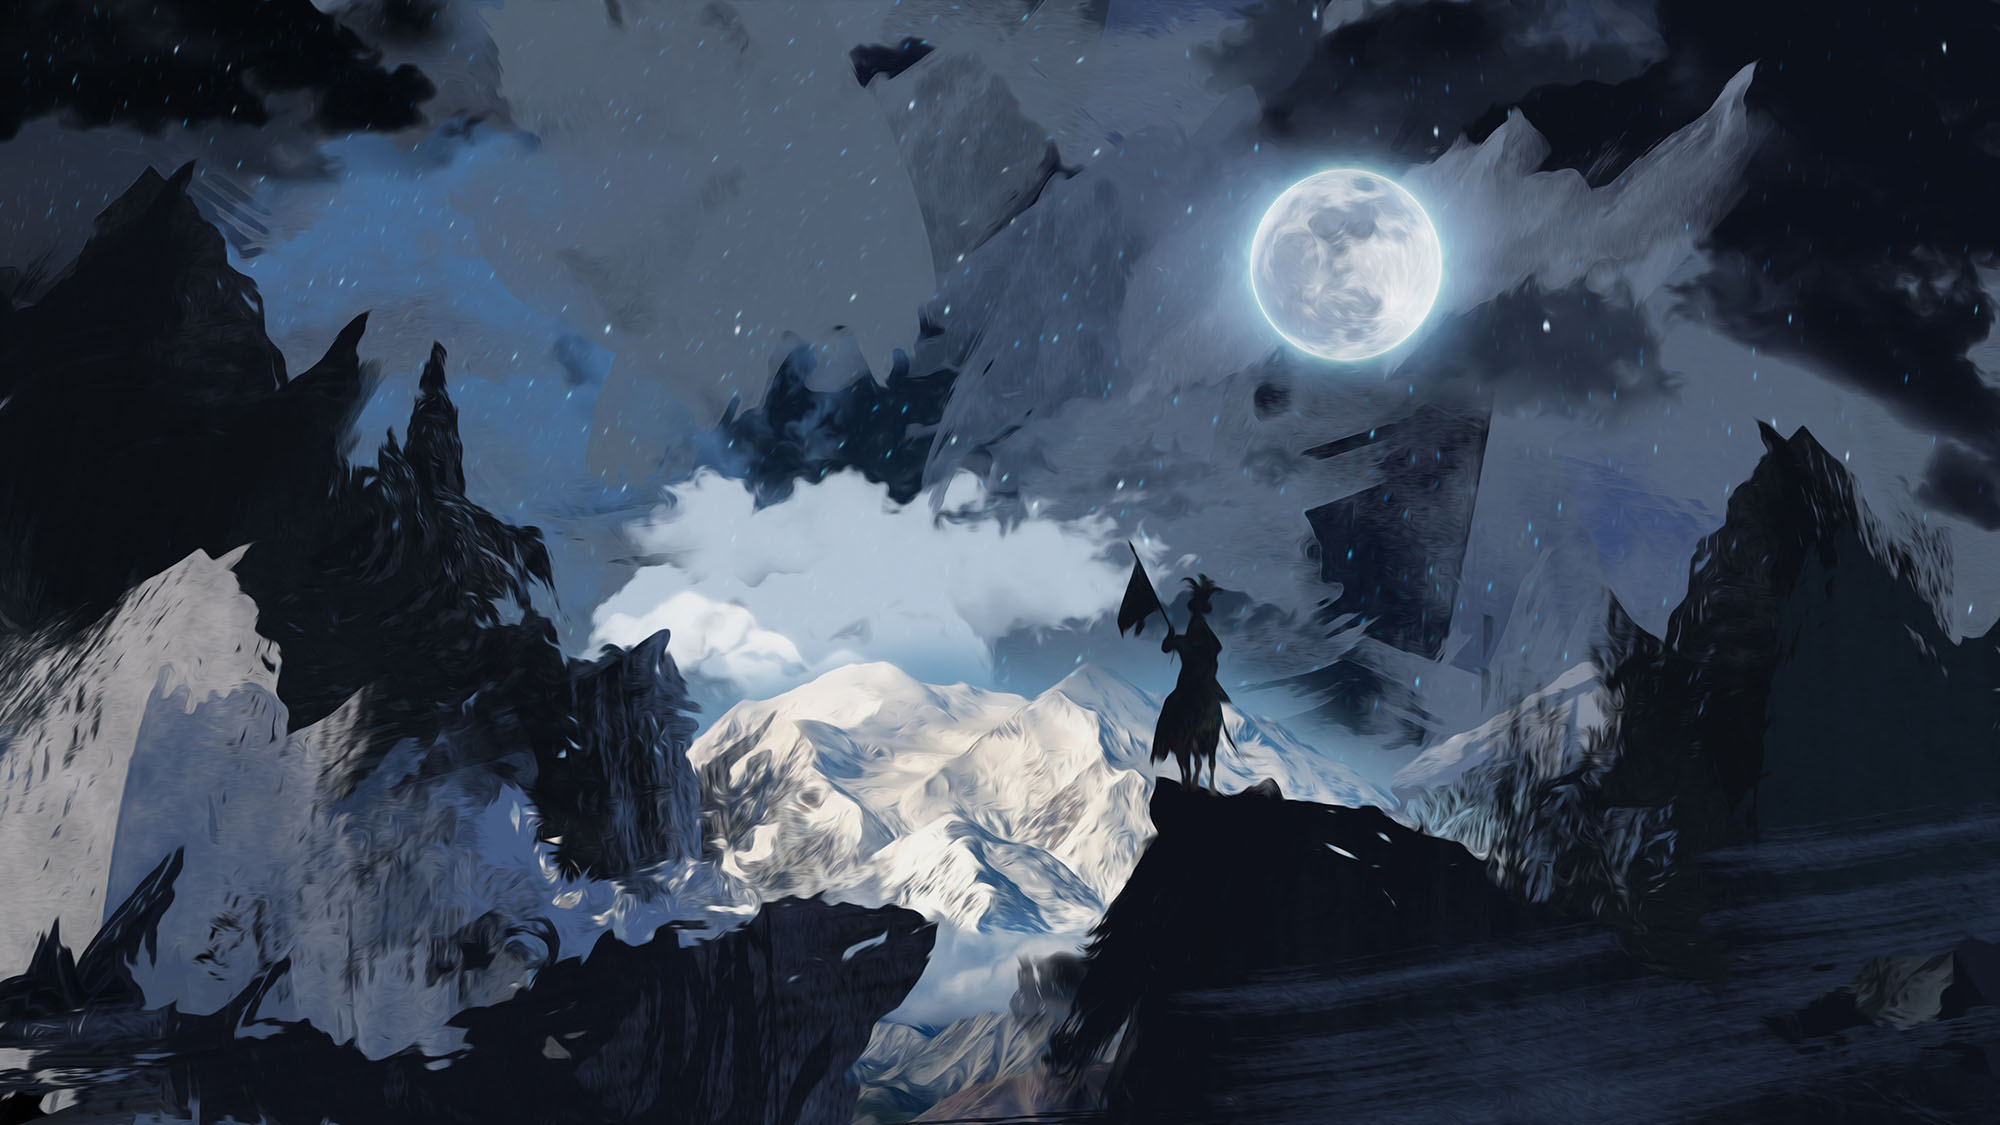 Painting of a Knight & Moon - Yuri B.